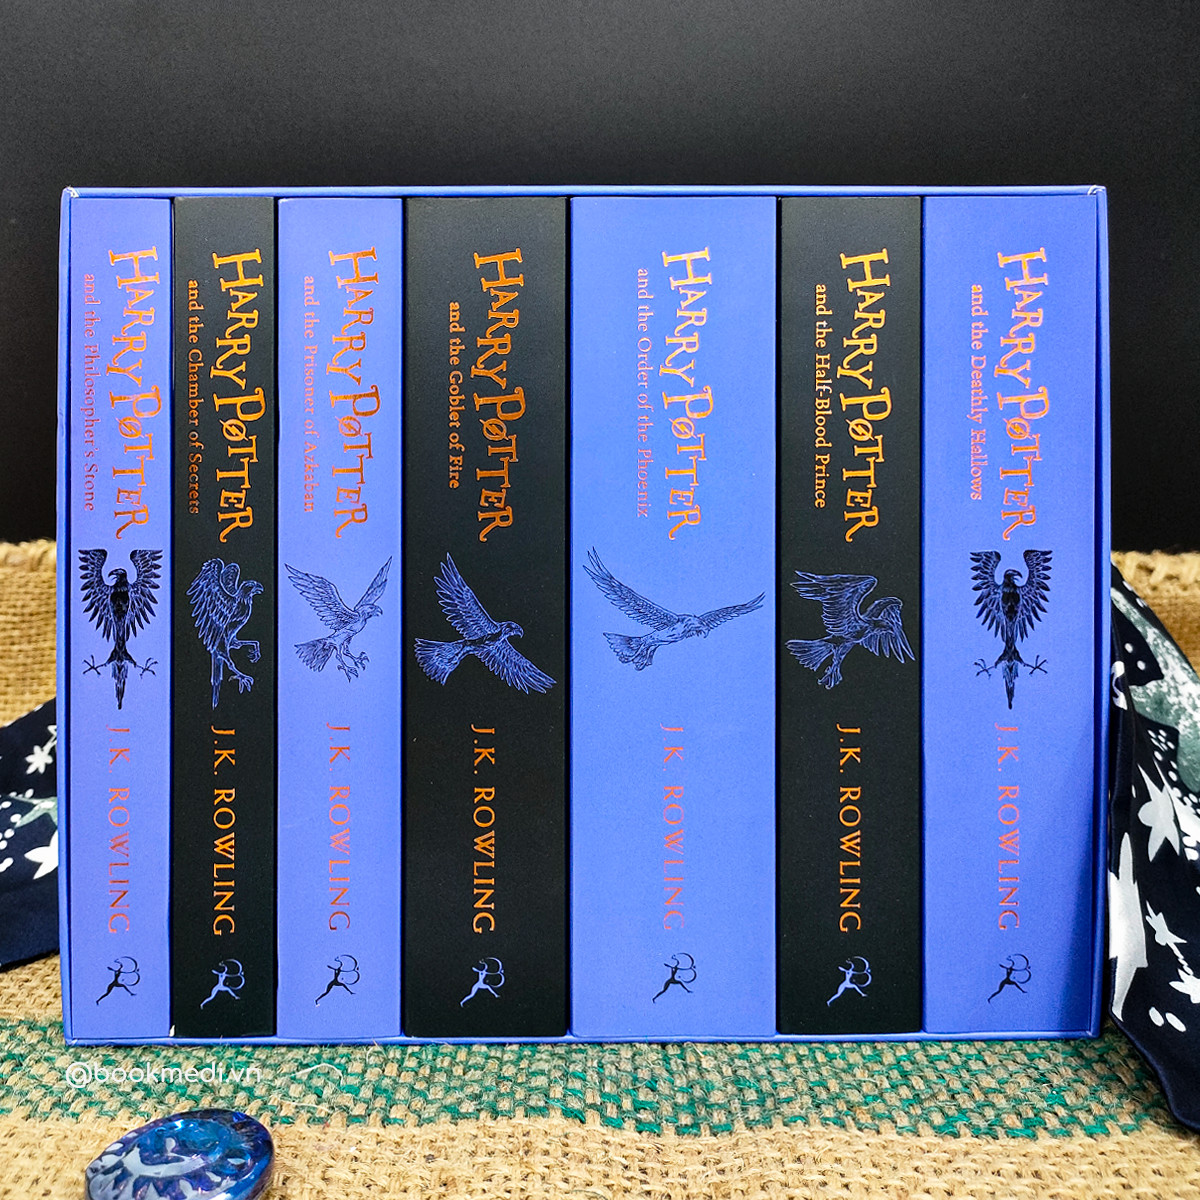 Harry Potter Ravenclaw House Edition Paperback Box Set